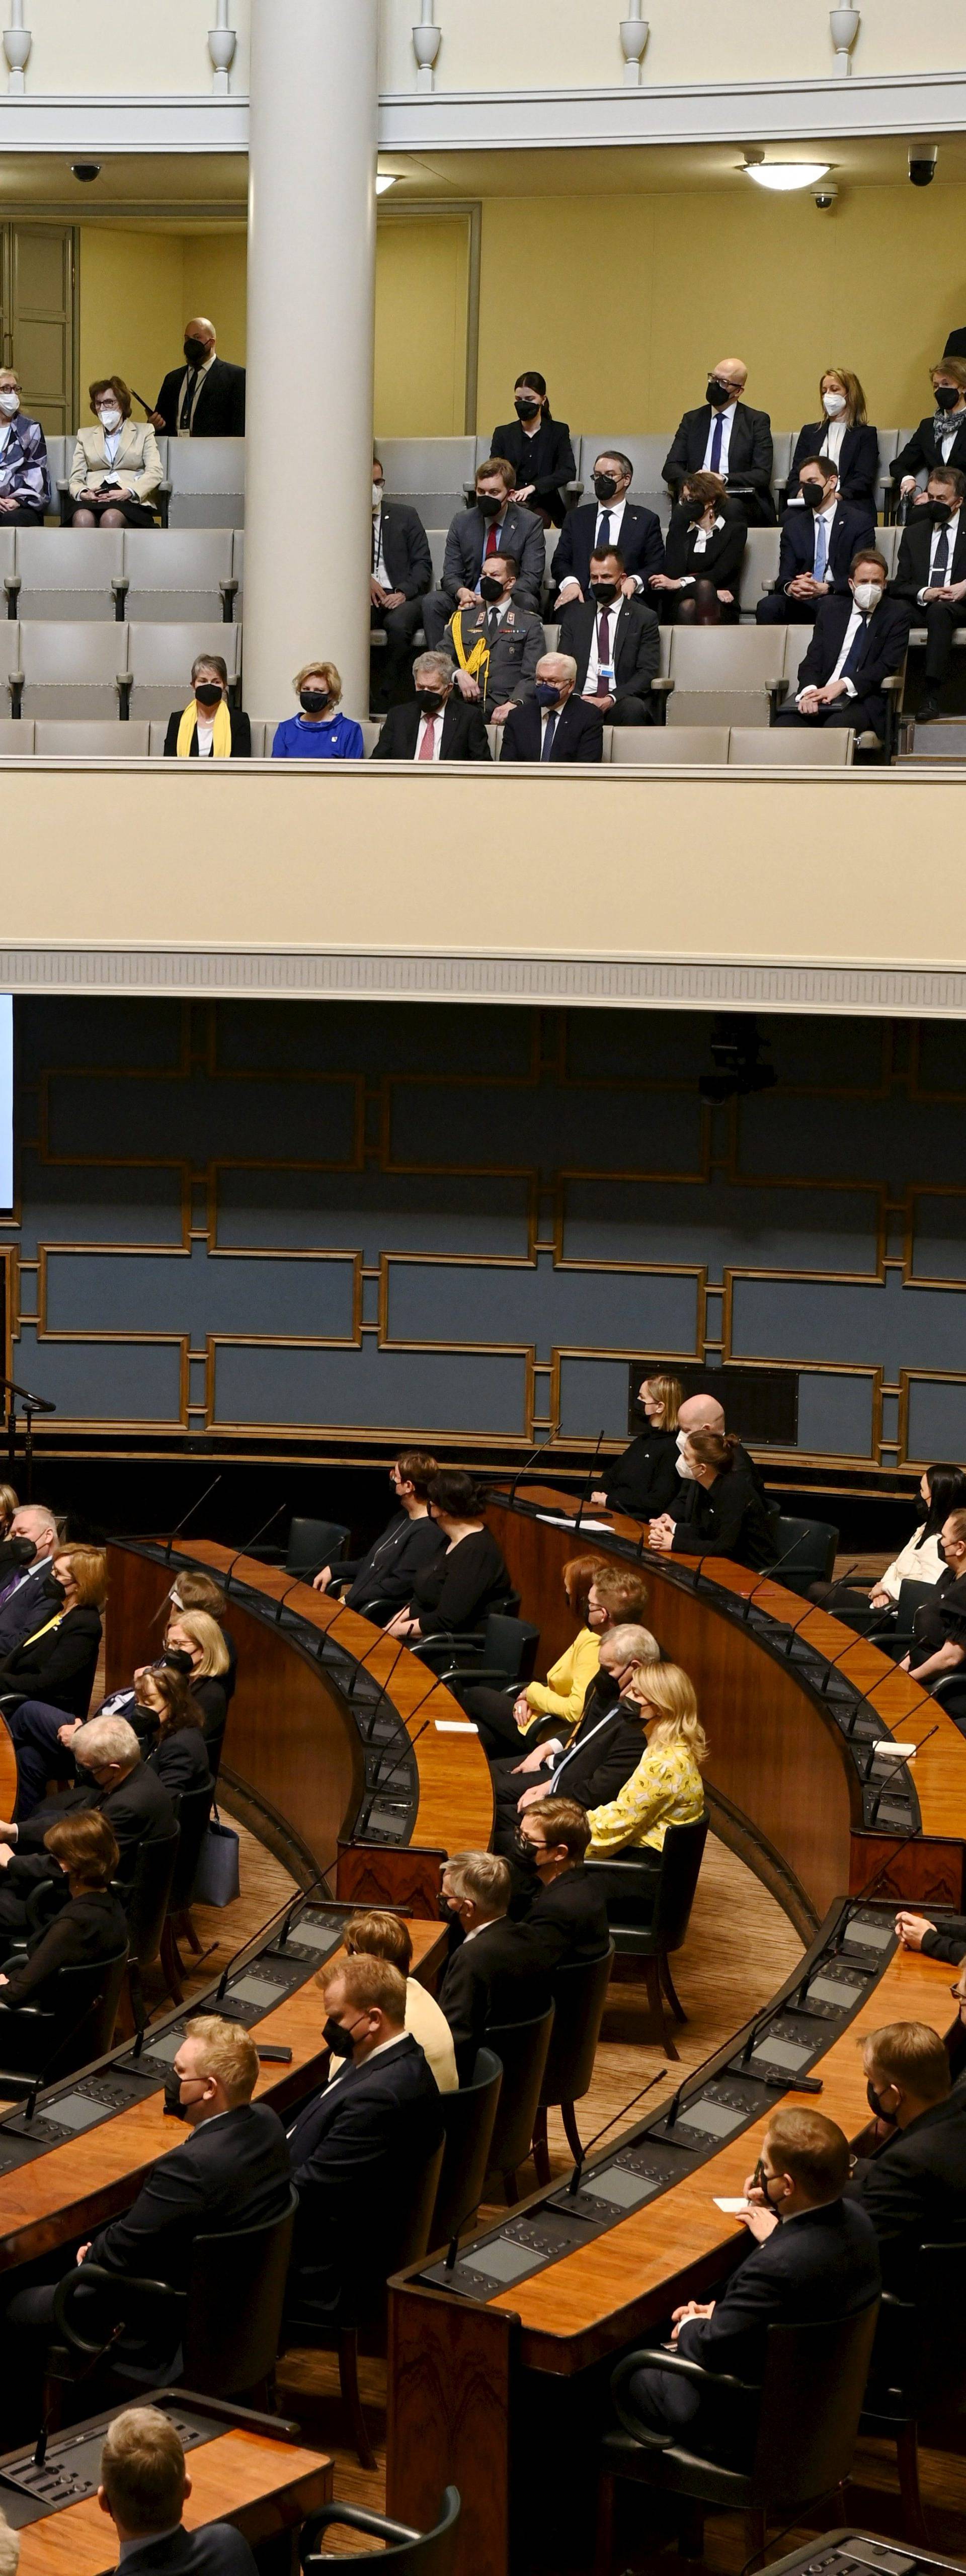 Ukrainian President addresses the Finnish Parliament